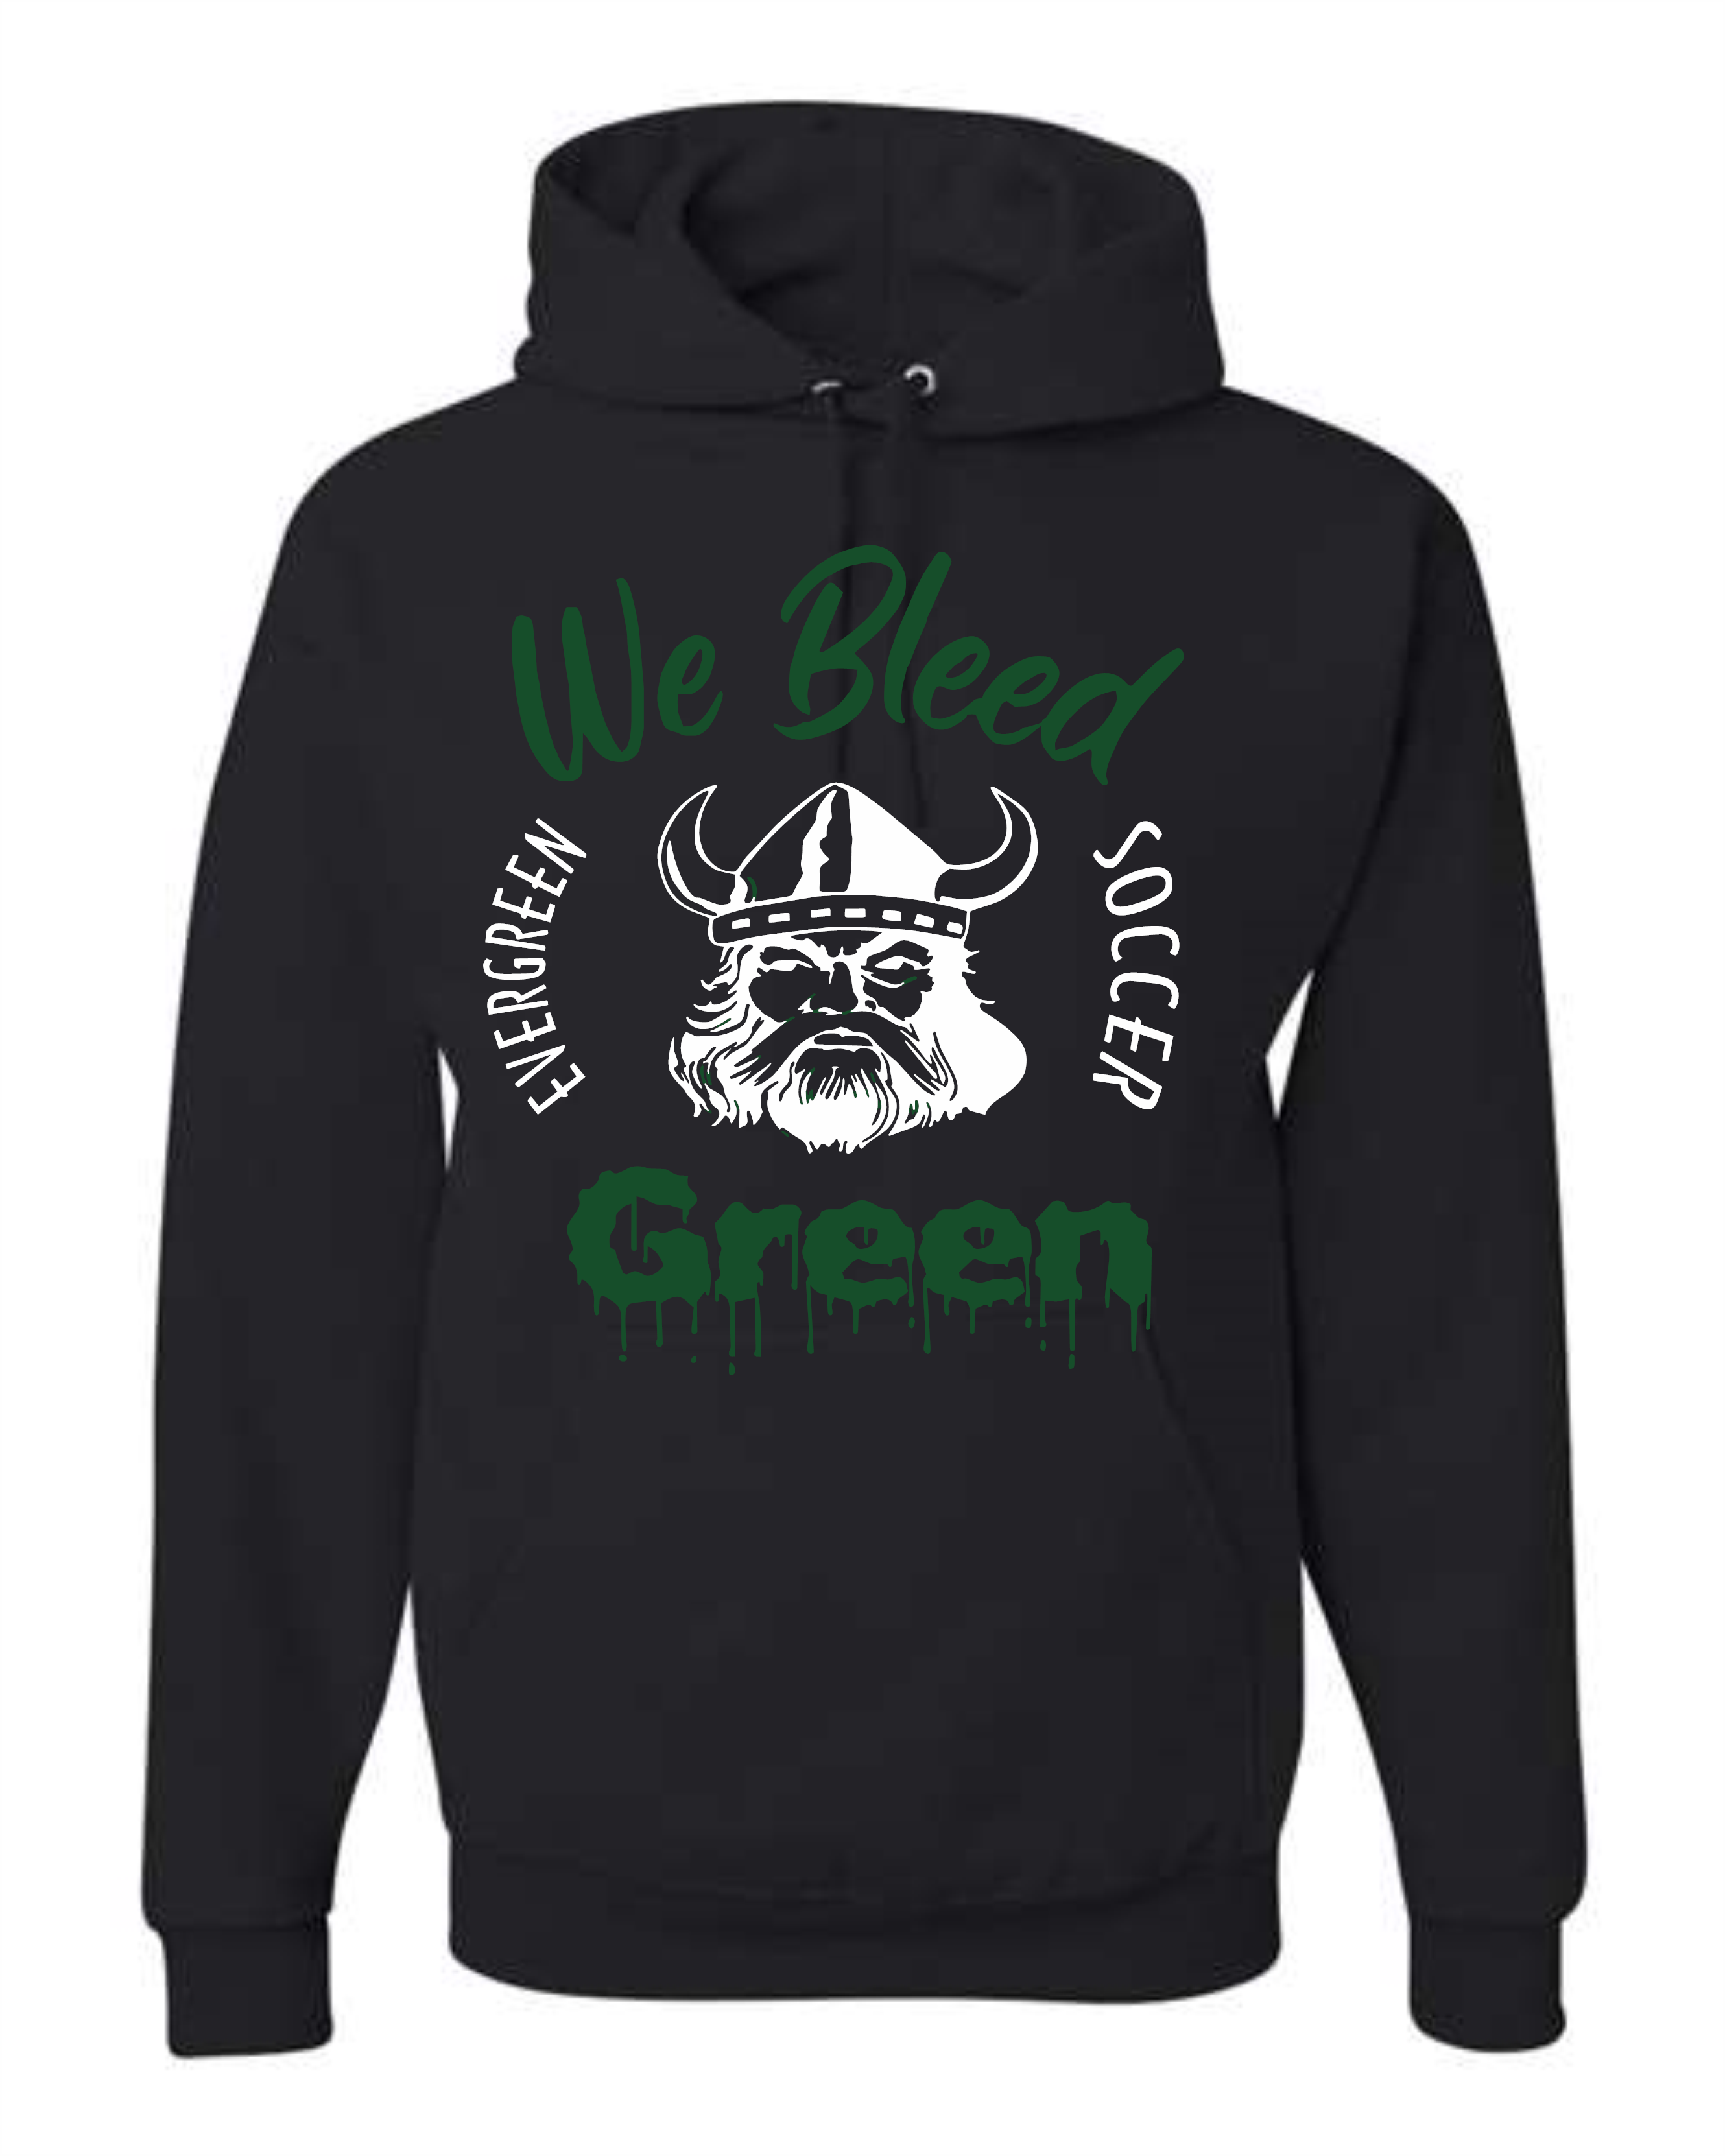 We Bleed Green Soccer